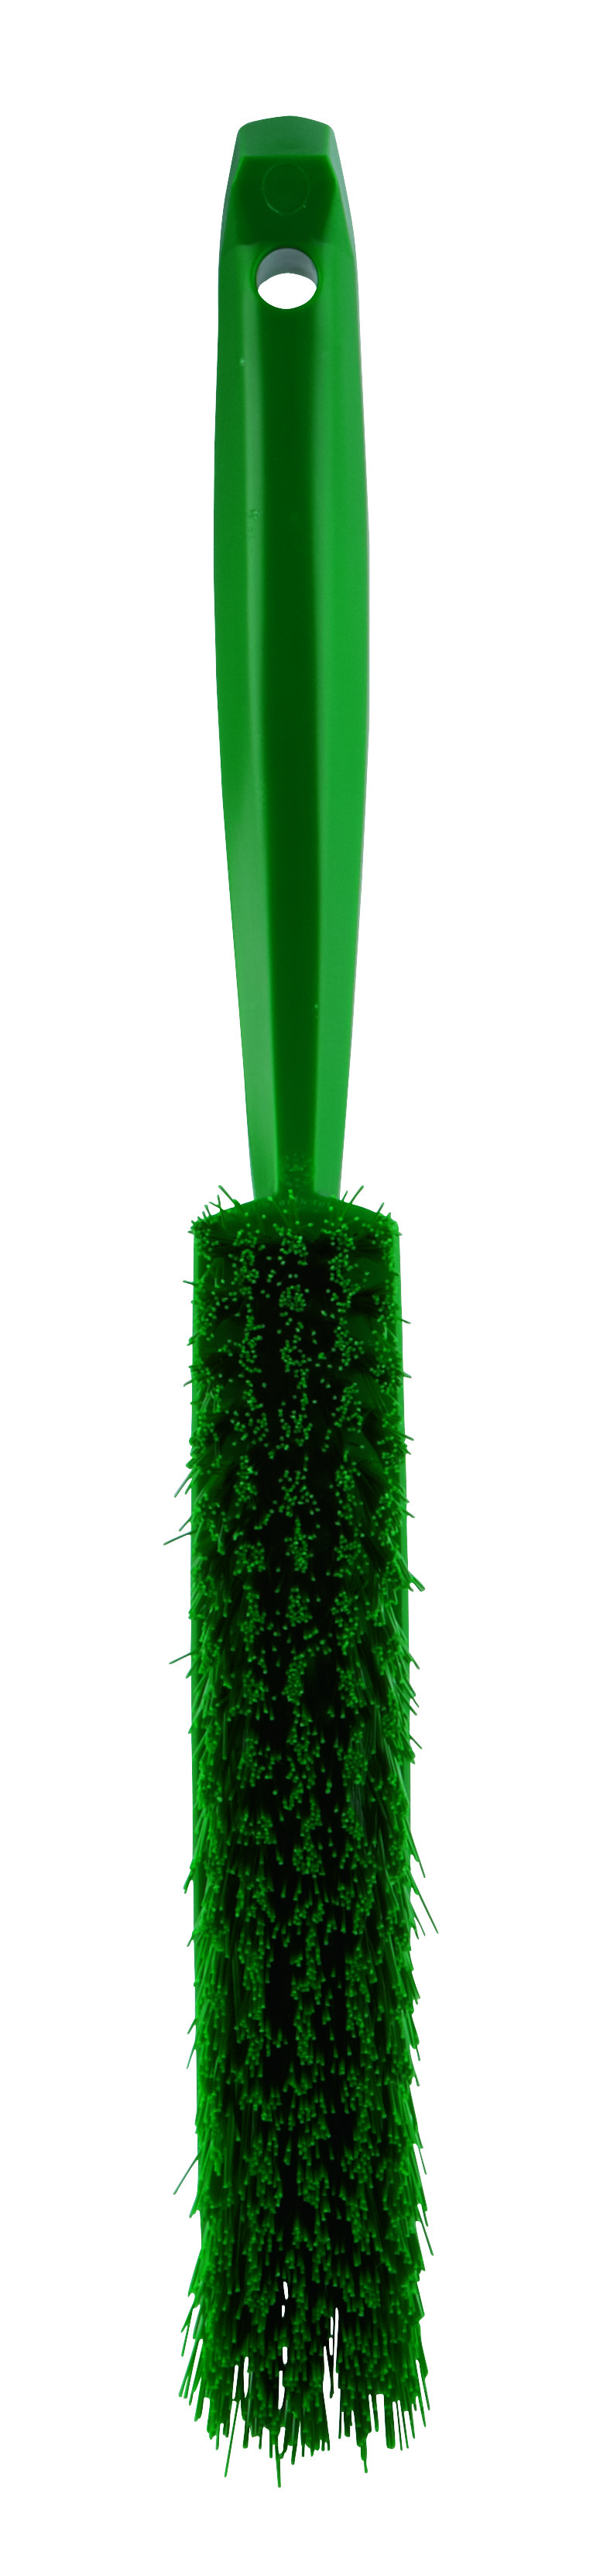 Щетка Vikan ручная средней жесткости, 330 мм, зеленая